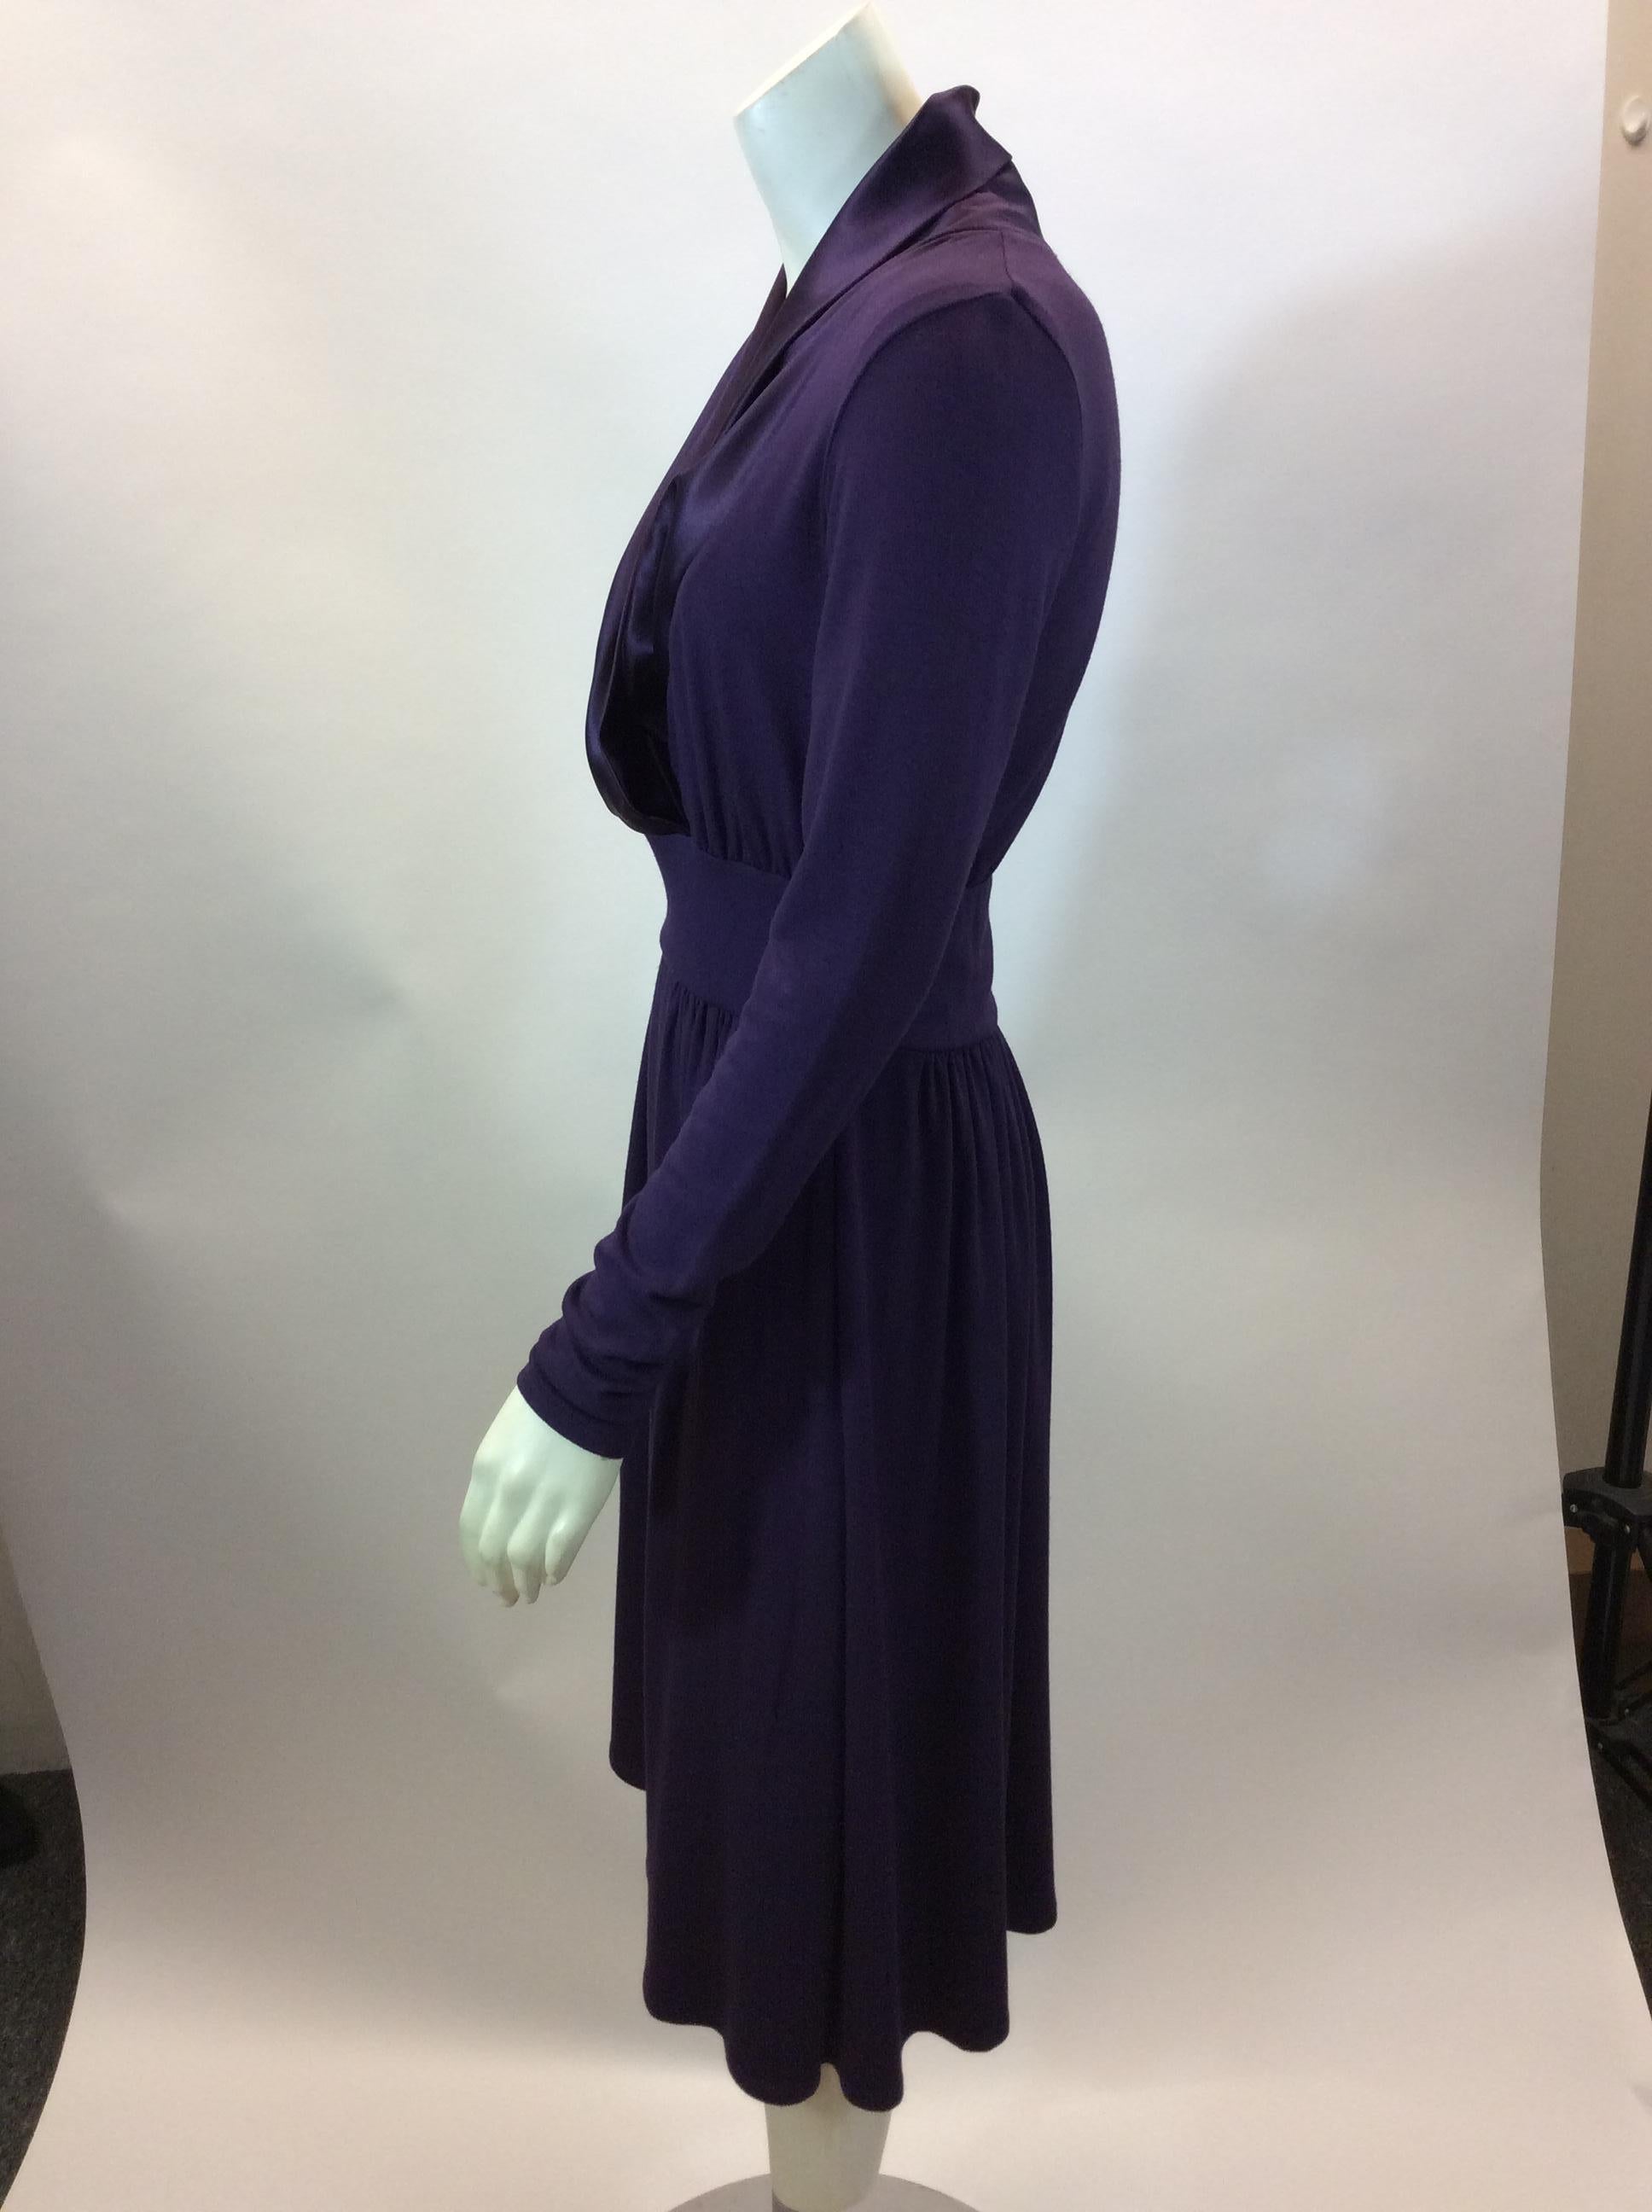 Max Mara Purple Long Sleeve Dress
Made in Italy
75% Viscose, 20% Wool, 5% Elastane
Size 40
Length 39